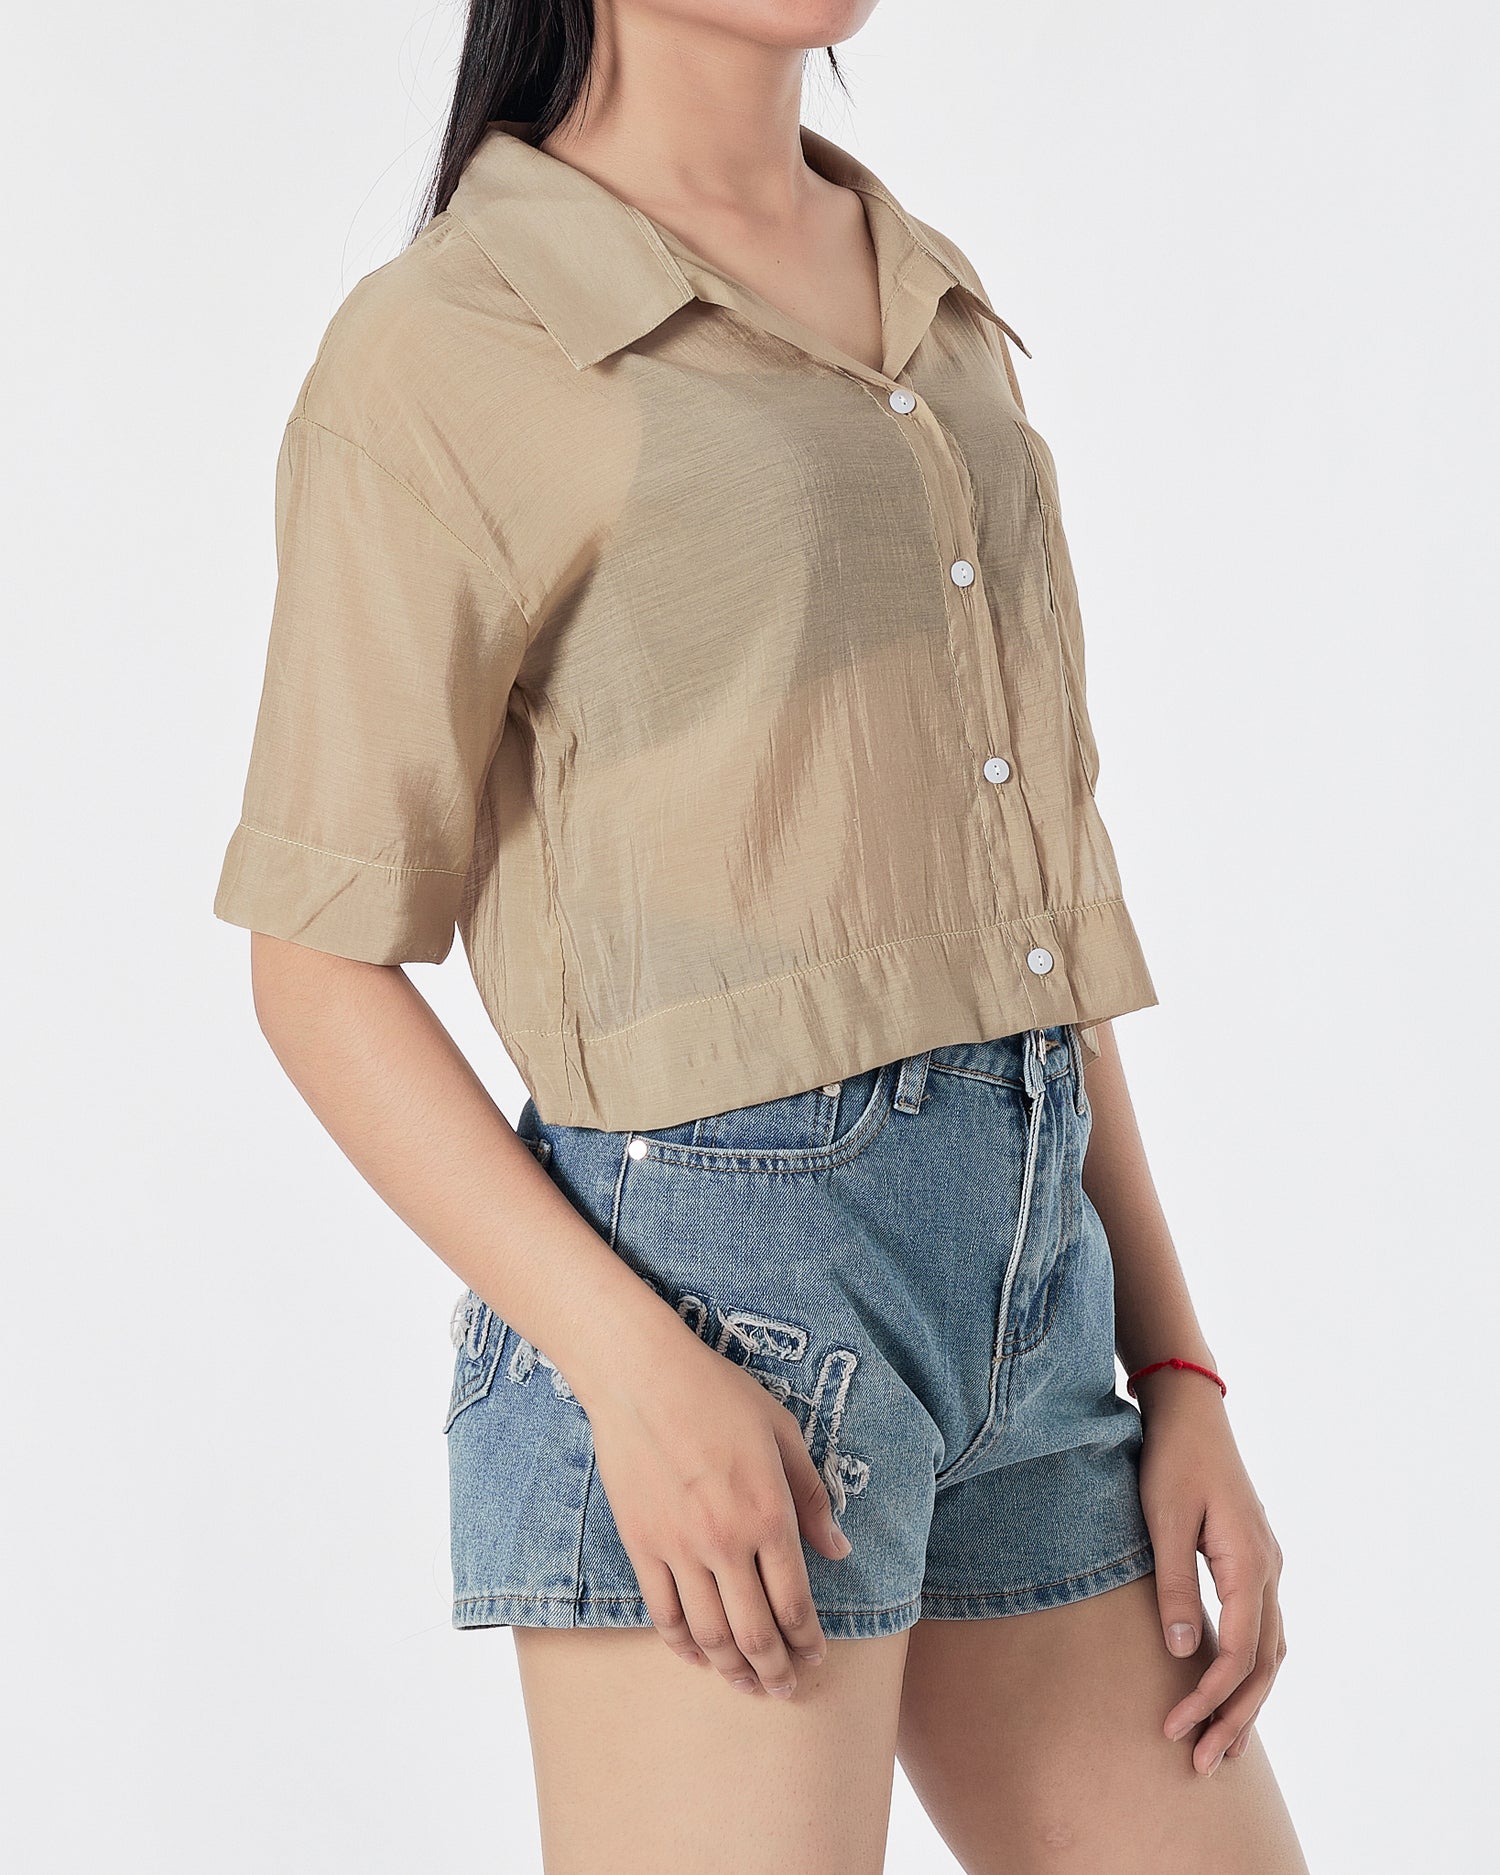 Plain Color Cream Lady Shirts Short Sleeve 12.90